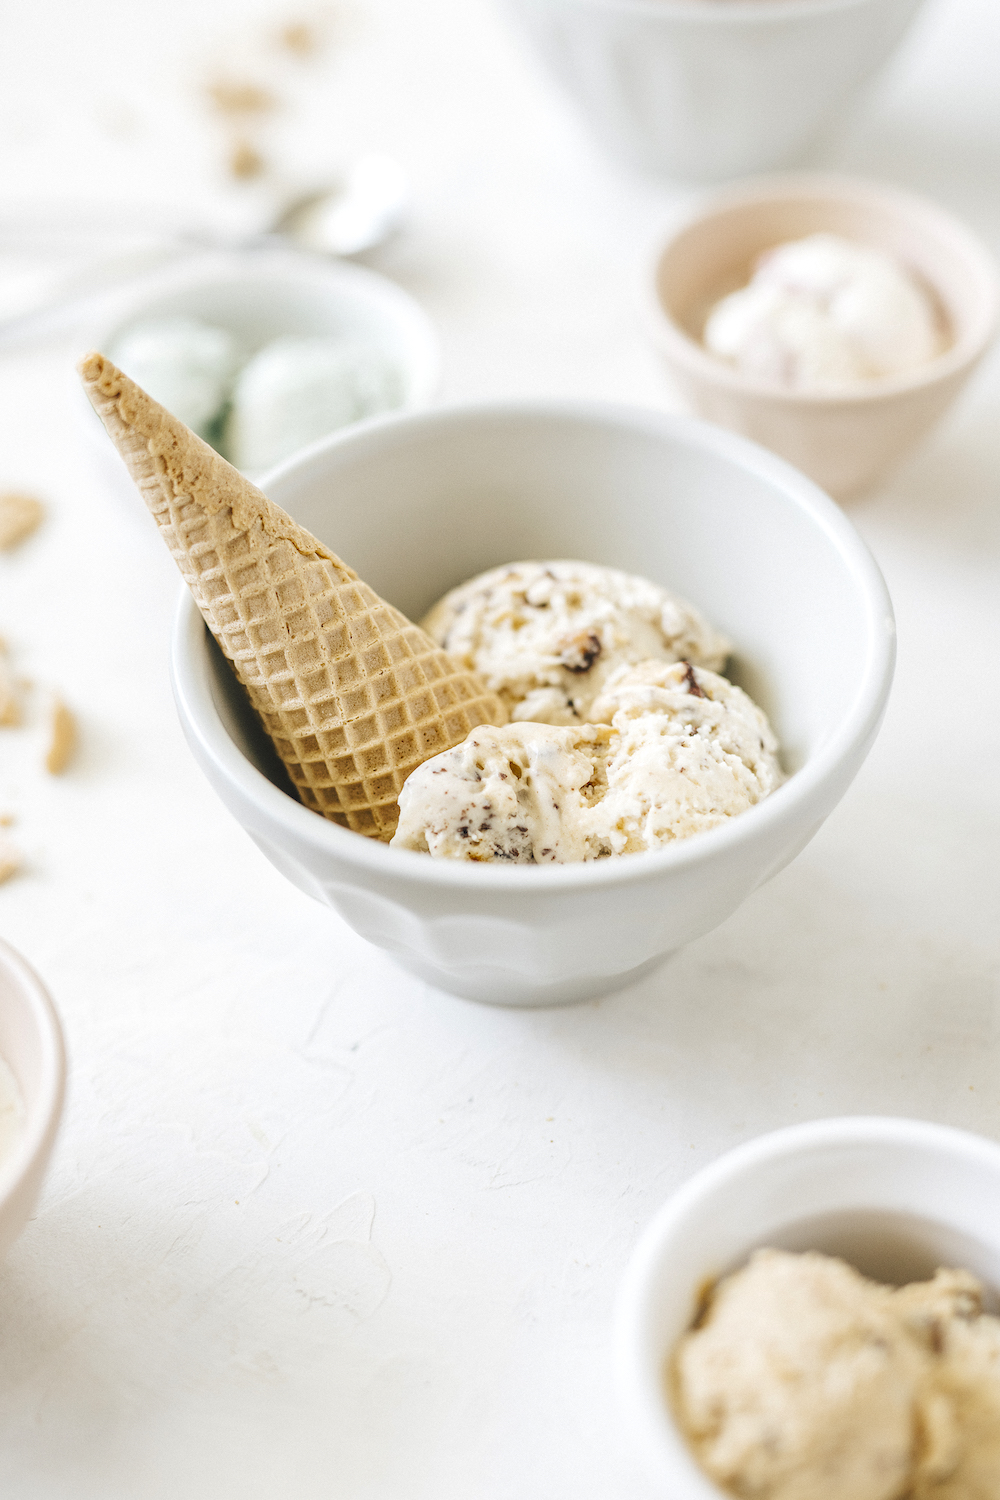 camille-styles-ice-cream-dairy-free-gluten-free-5477